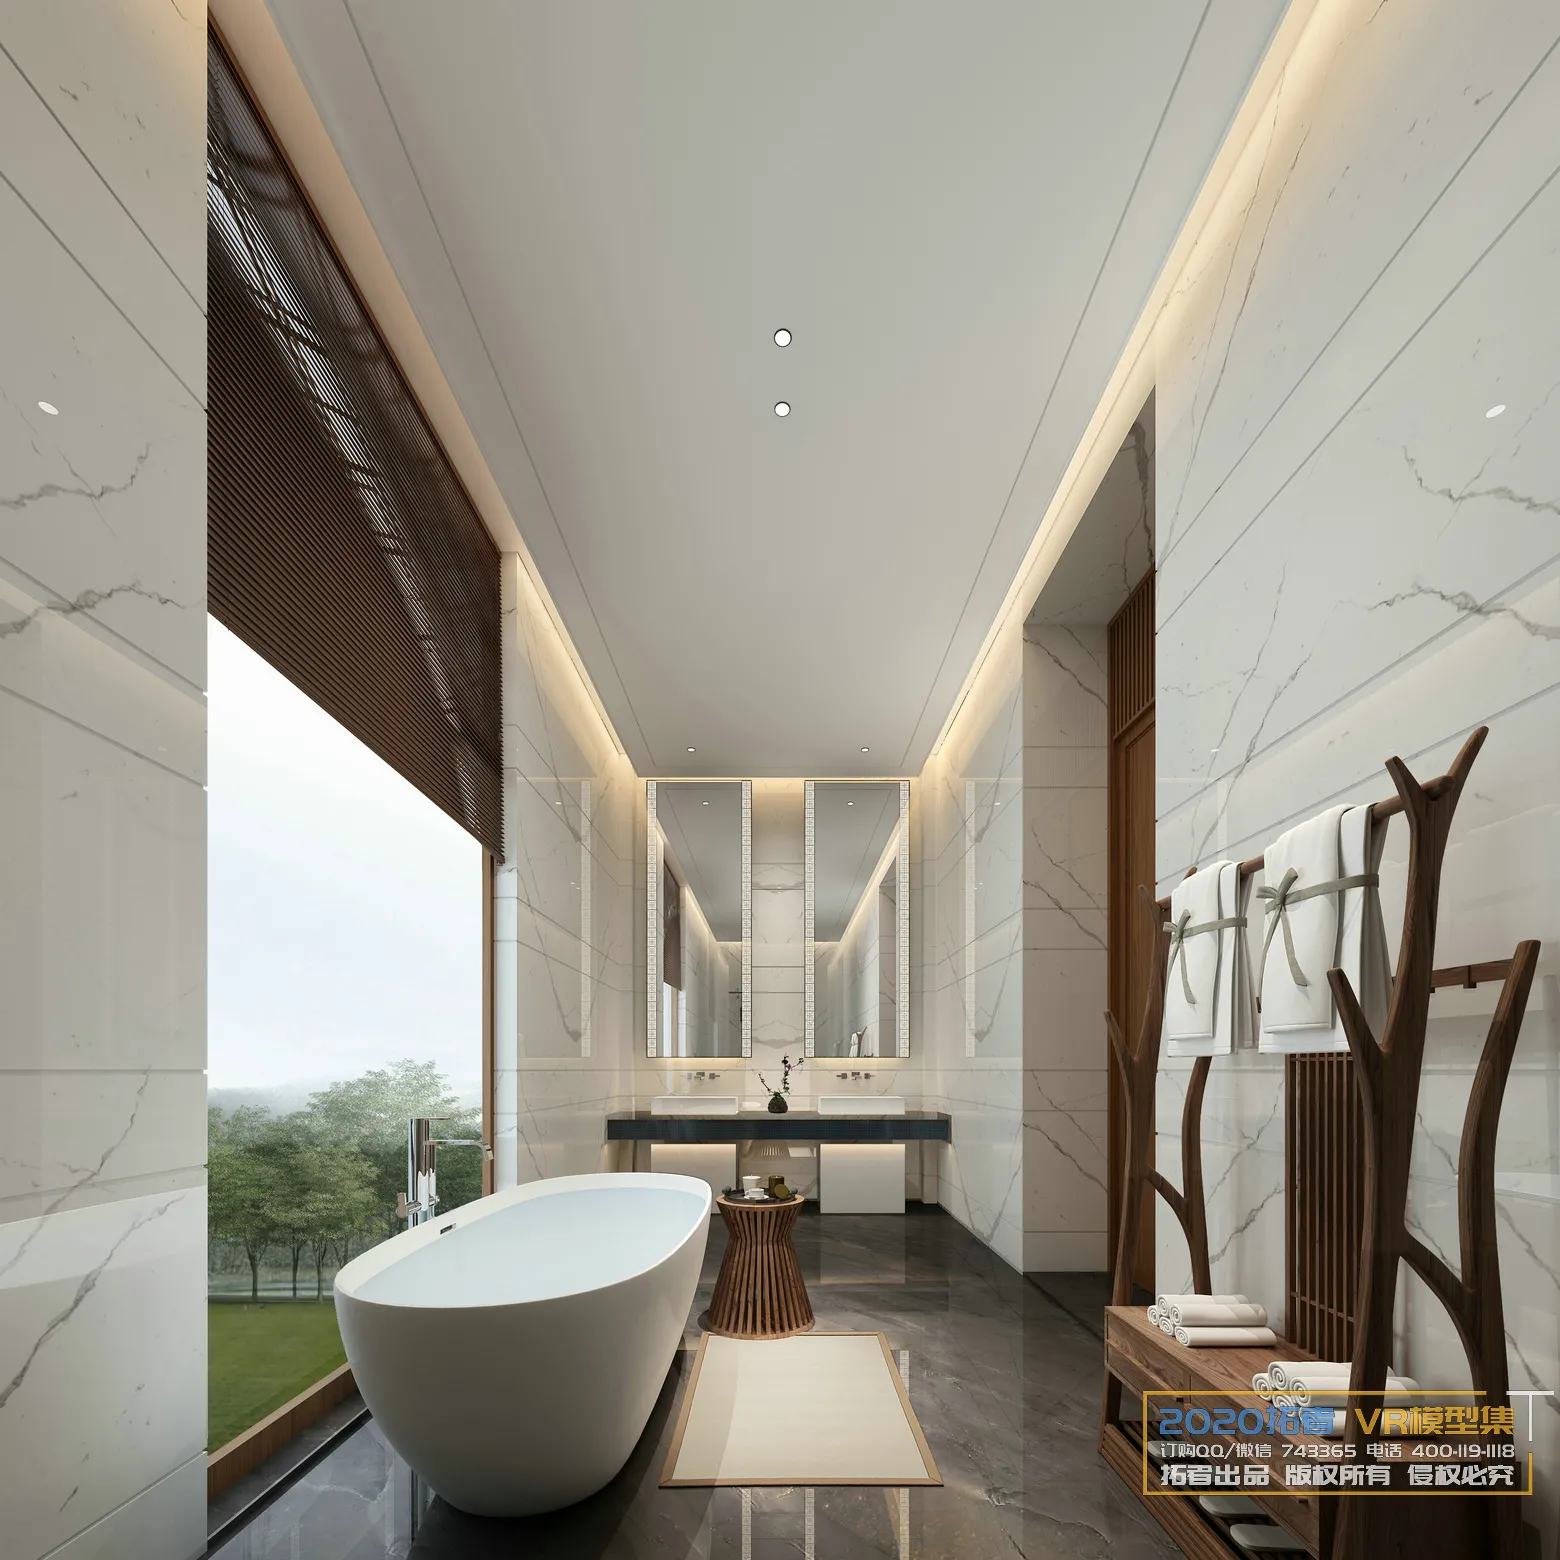 Extension Interior 20 – BATHROOM & WATER CLOSED – 3